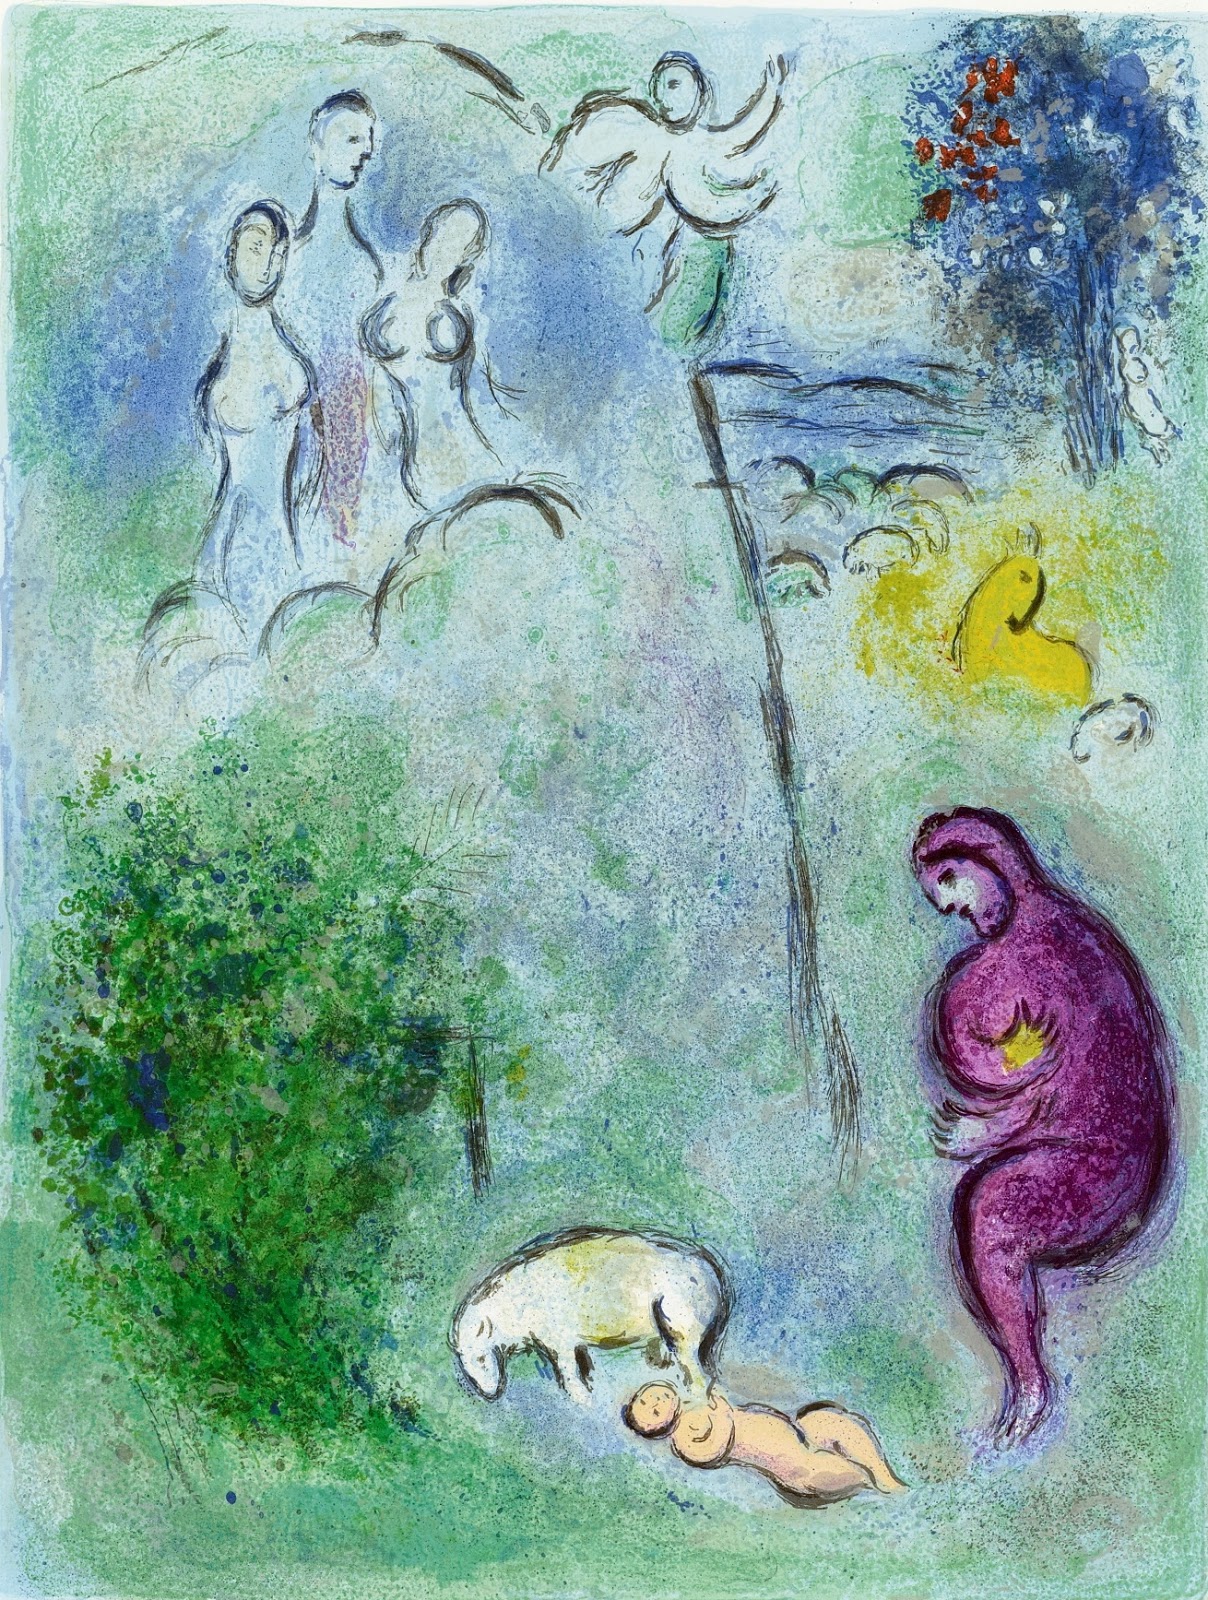 Marc+Chagall-1887-1985 (229).jpg